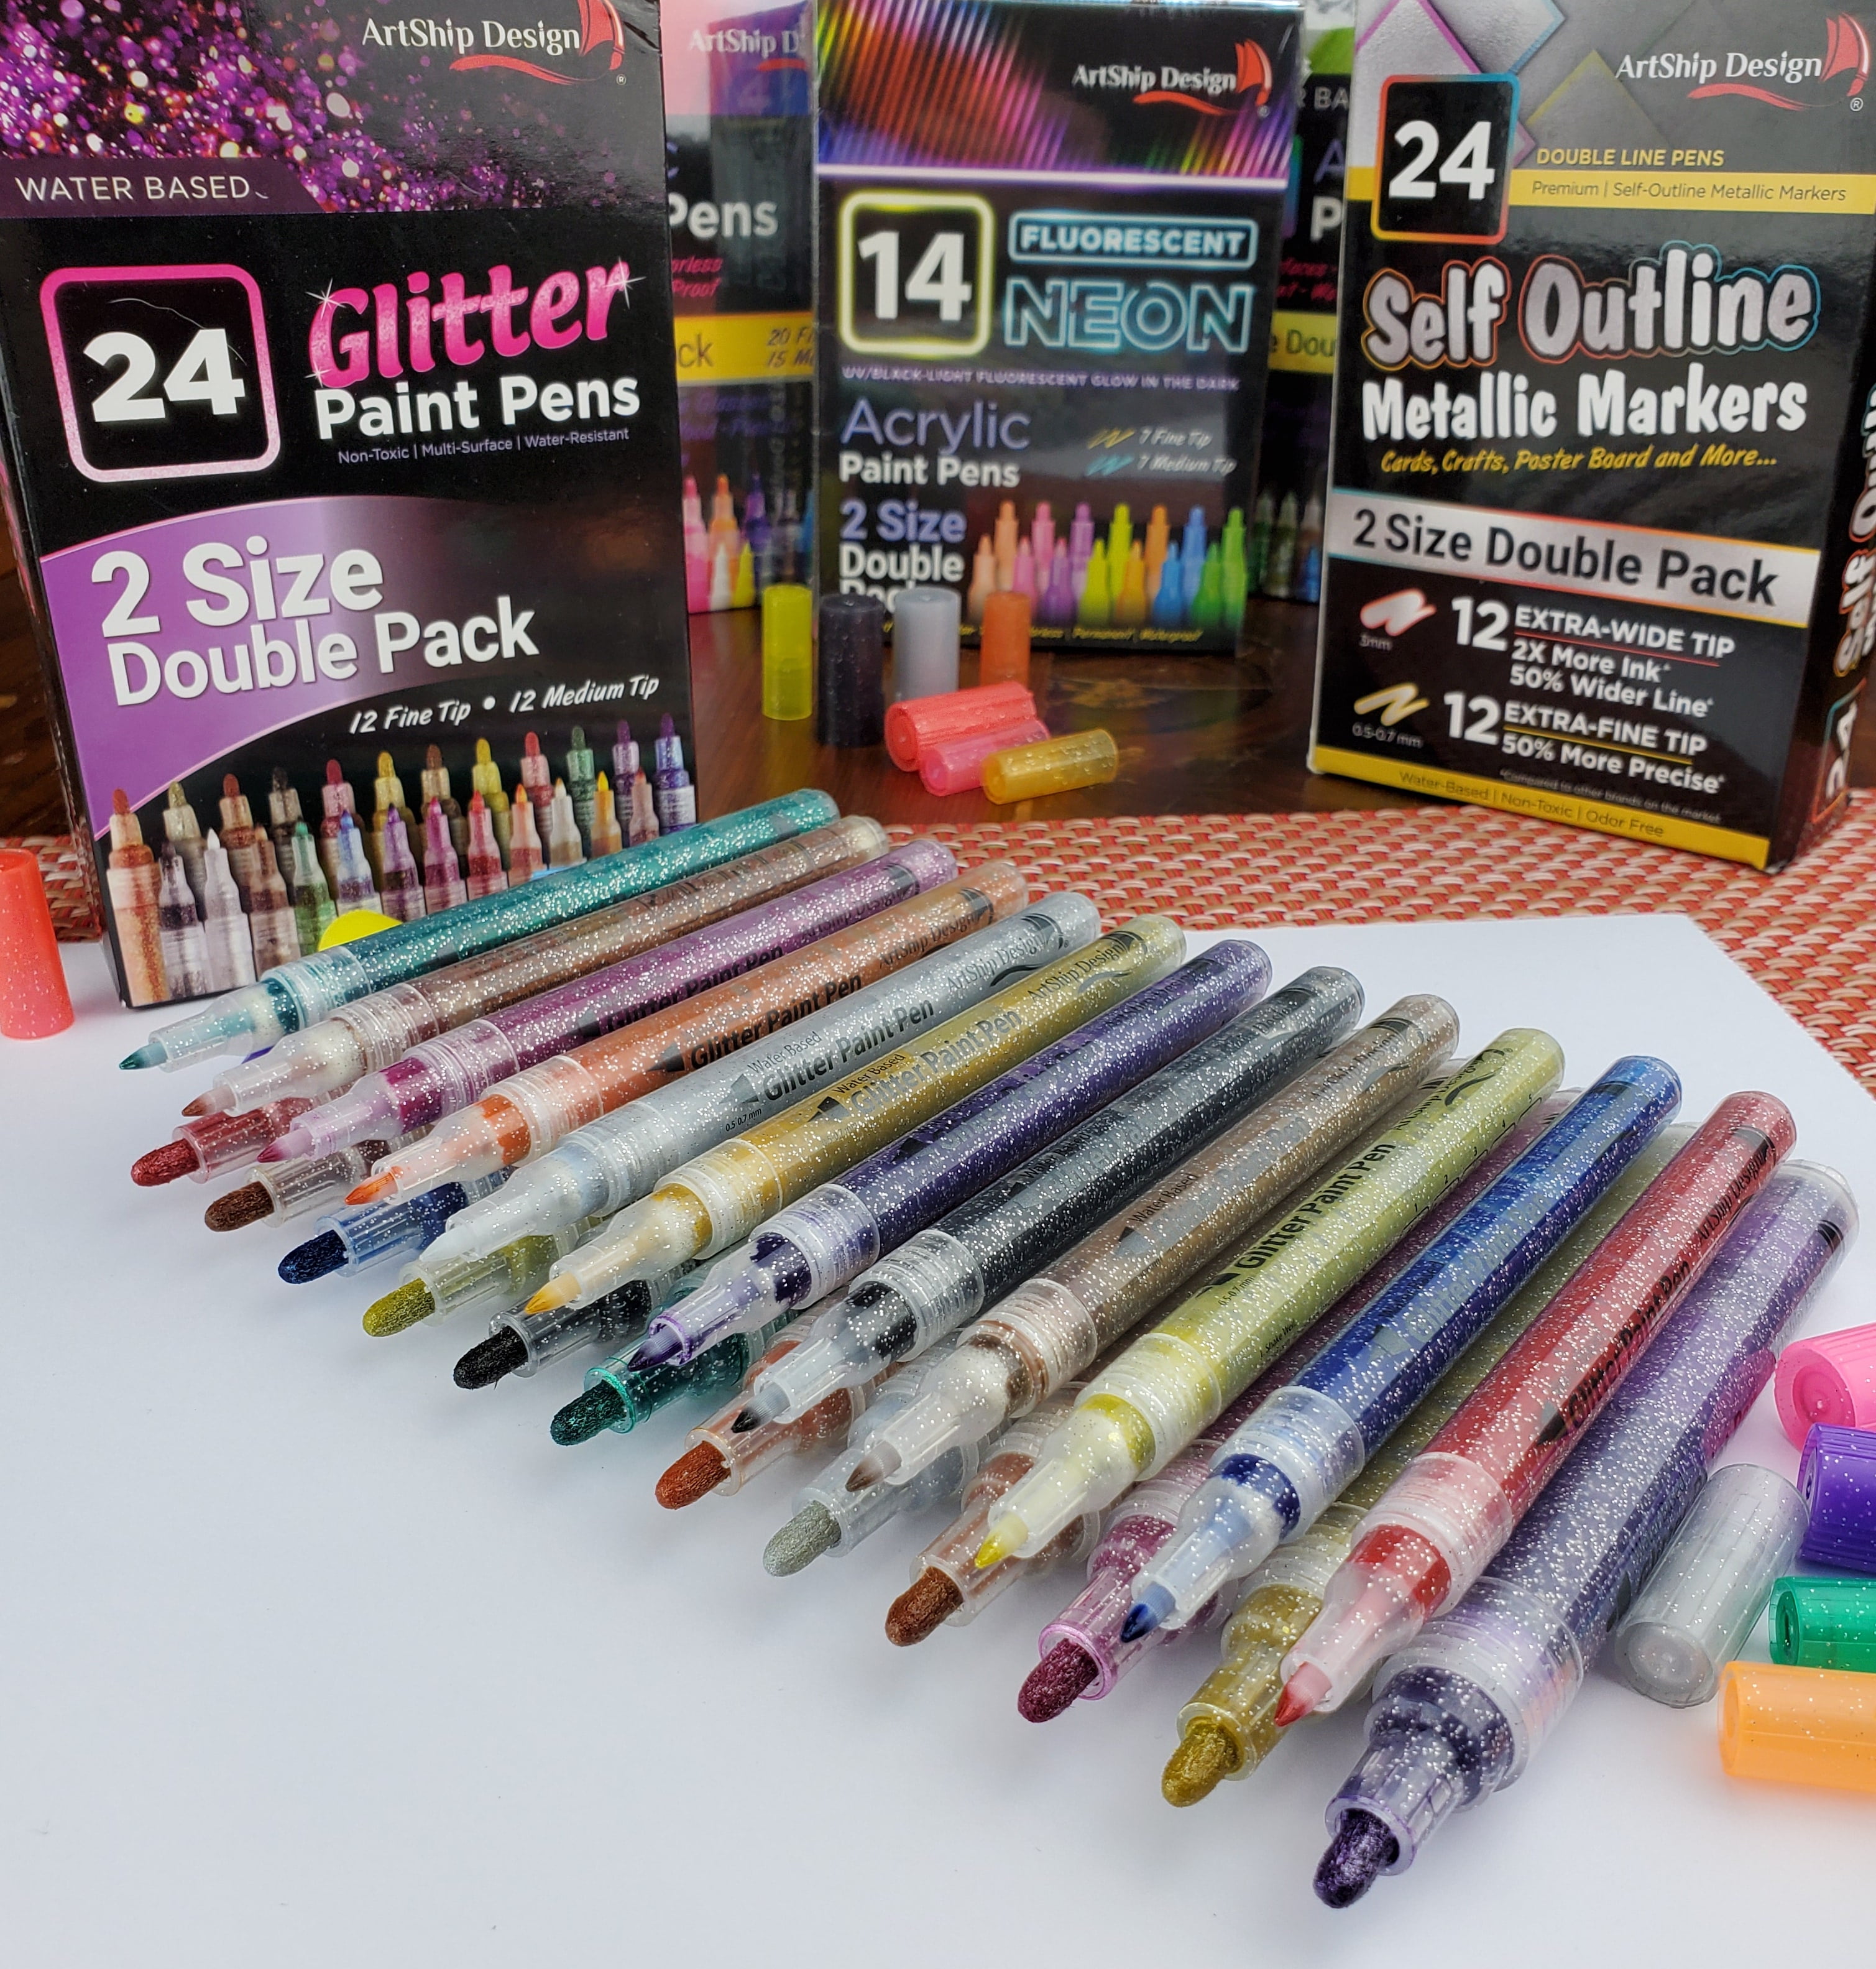 24 Glitter Paint Pens Double Pack - Extra Fine & Medium Tip - ArtShip  Design 